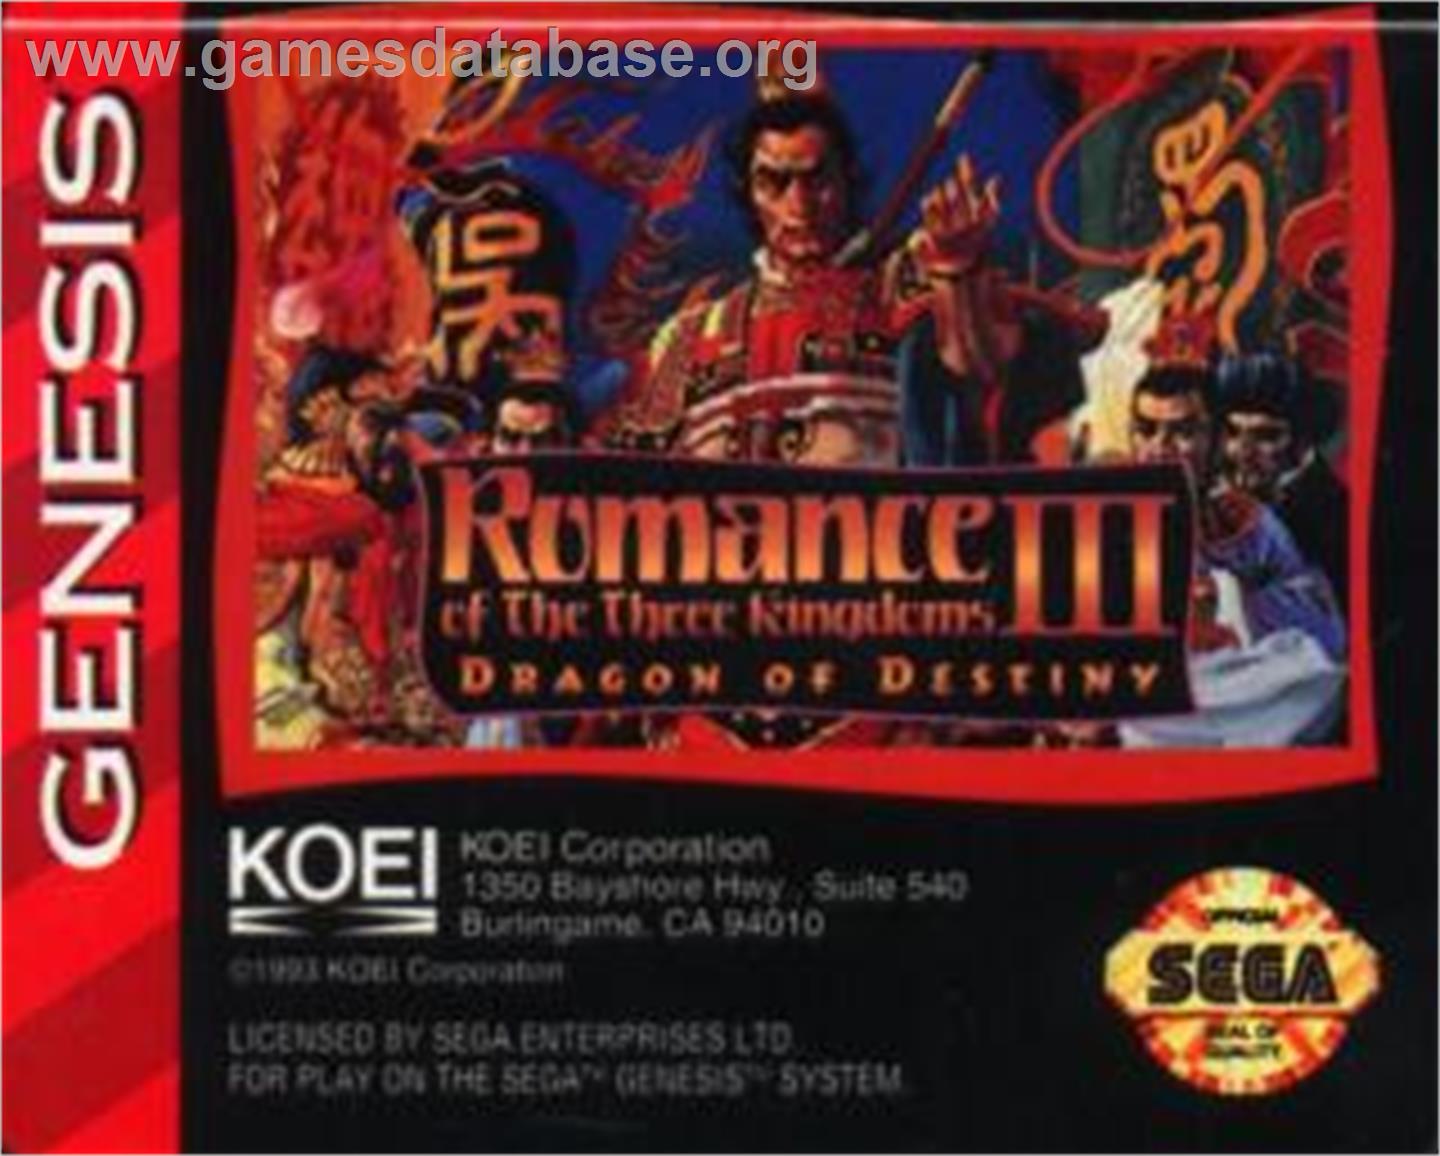 Romance of the Three Kingdoms III: Dragon of Destiny - Sega Nomad - Artwork - Cartridge